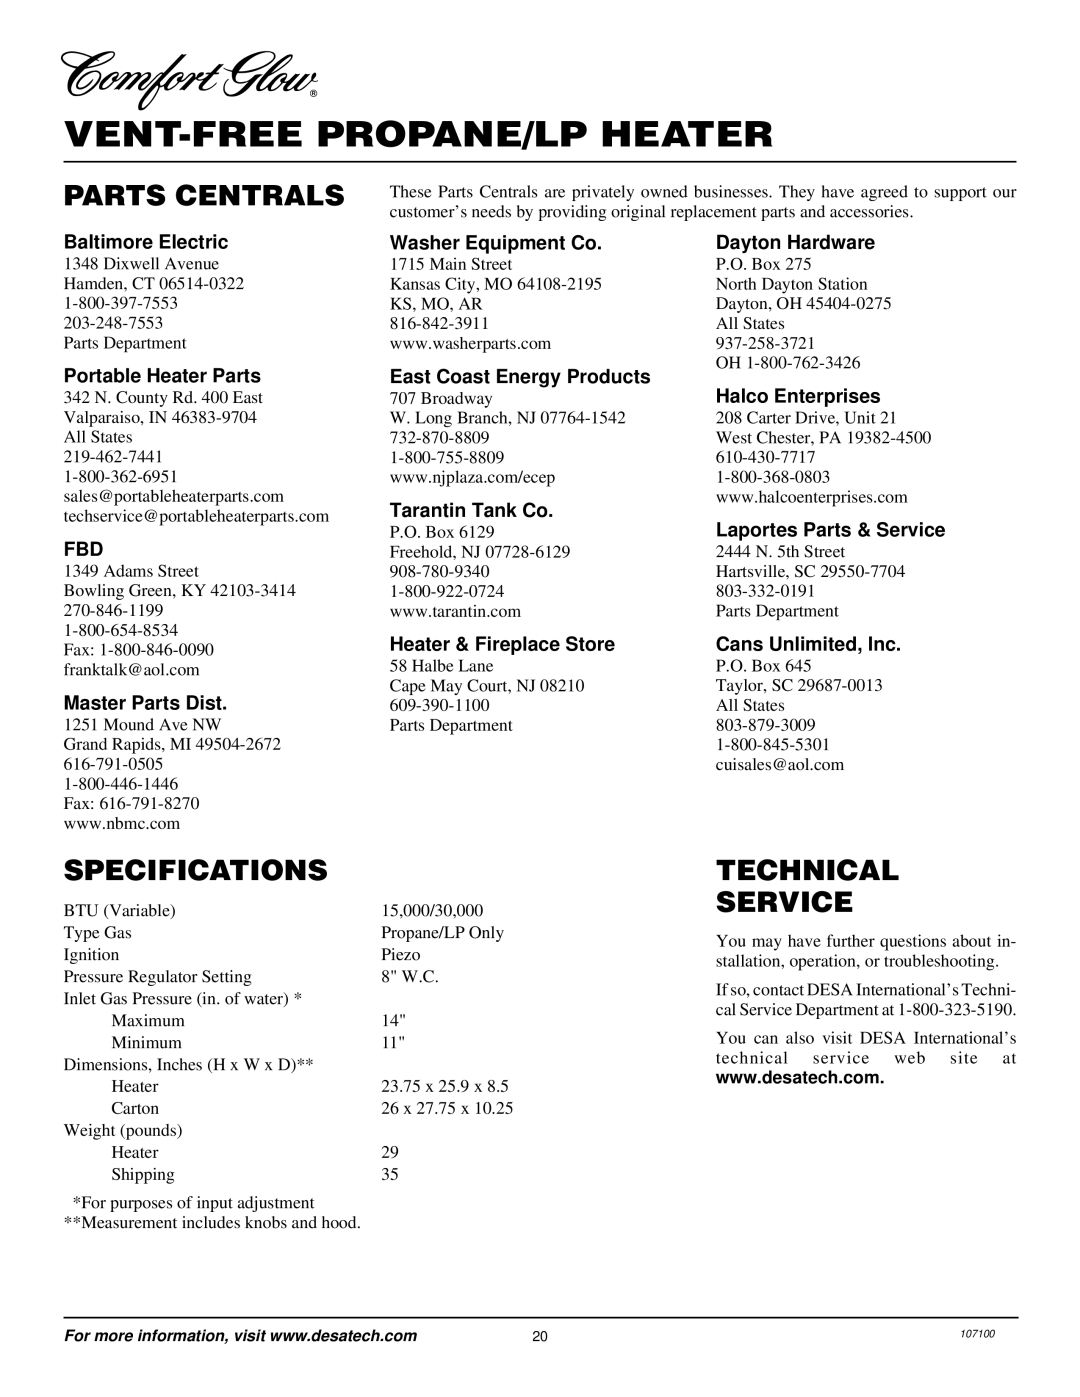 Desa RFP30TA installation manual Parts Centrals, Specifications, Technical Service 